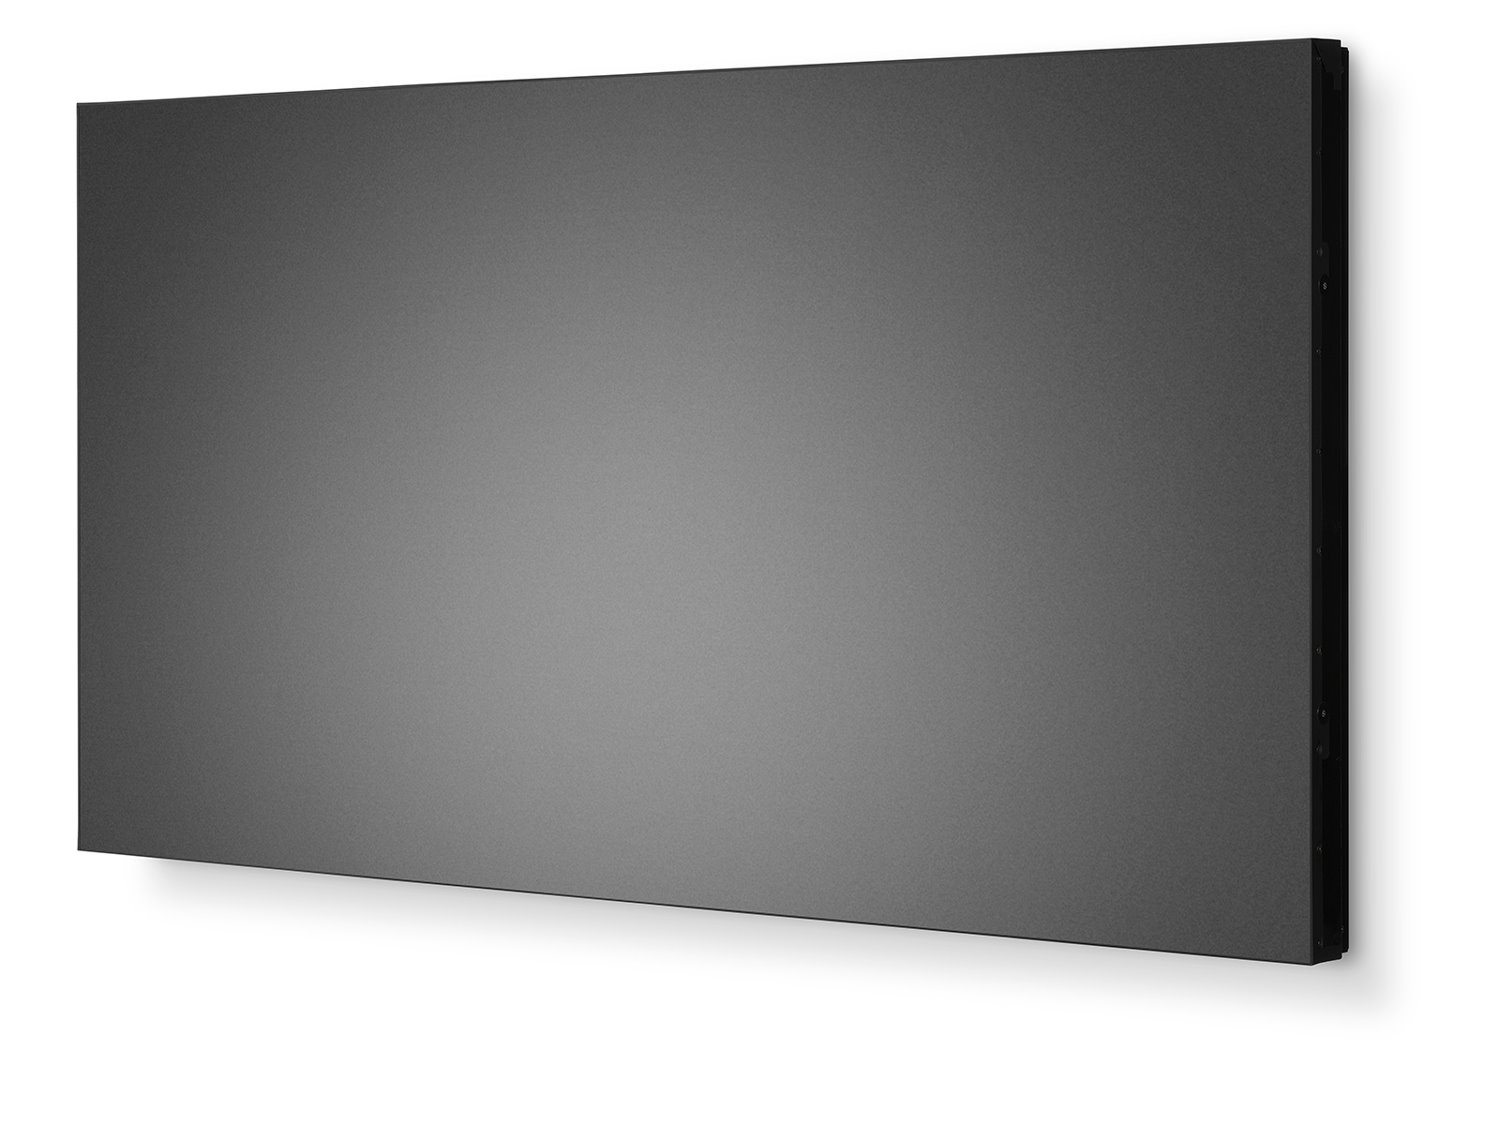 NEC Display 46" Ultra-Narrow Bezel Professional-Grade Display